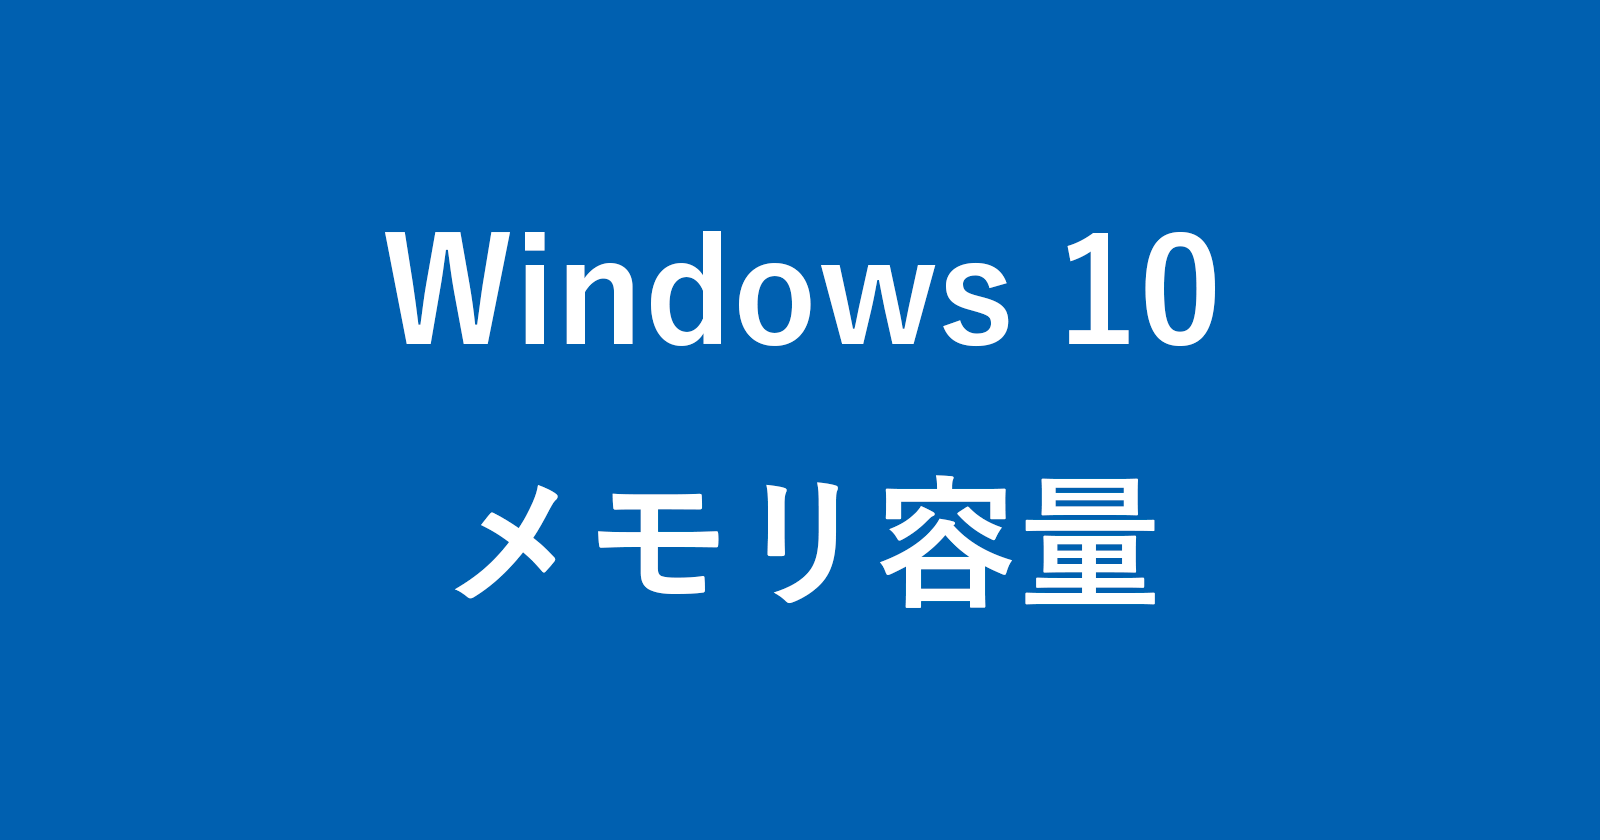 windows 10 memory size